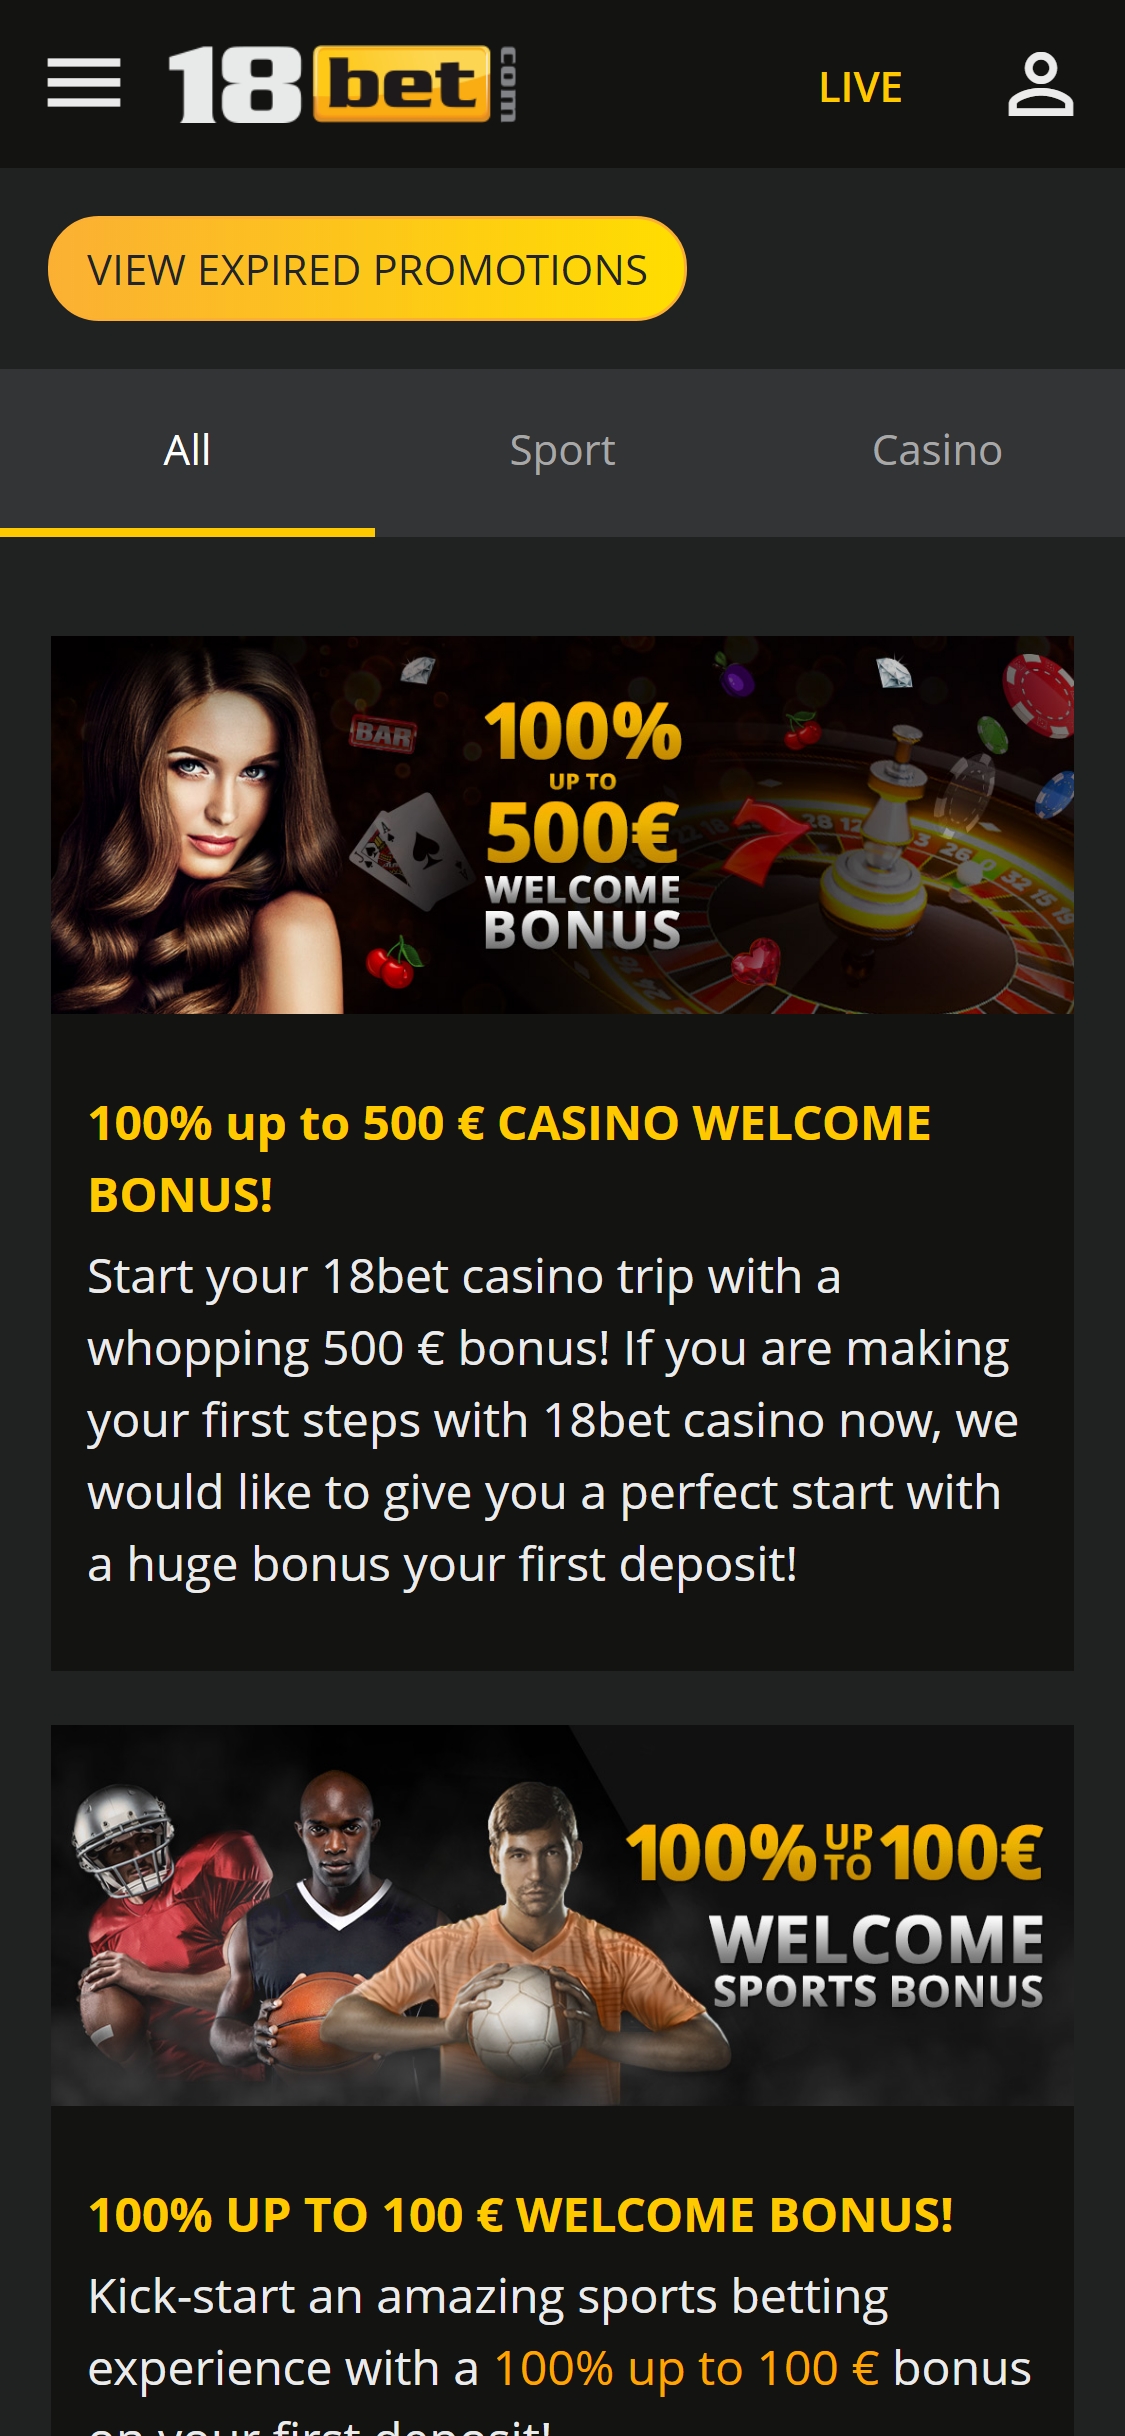 18Bet Casino Mobile No Deposit Bonus Review